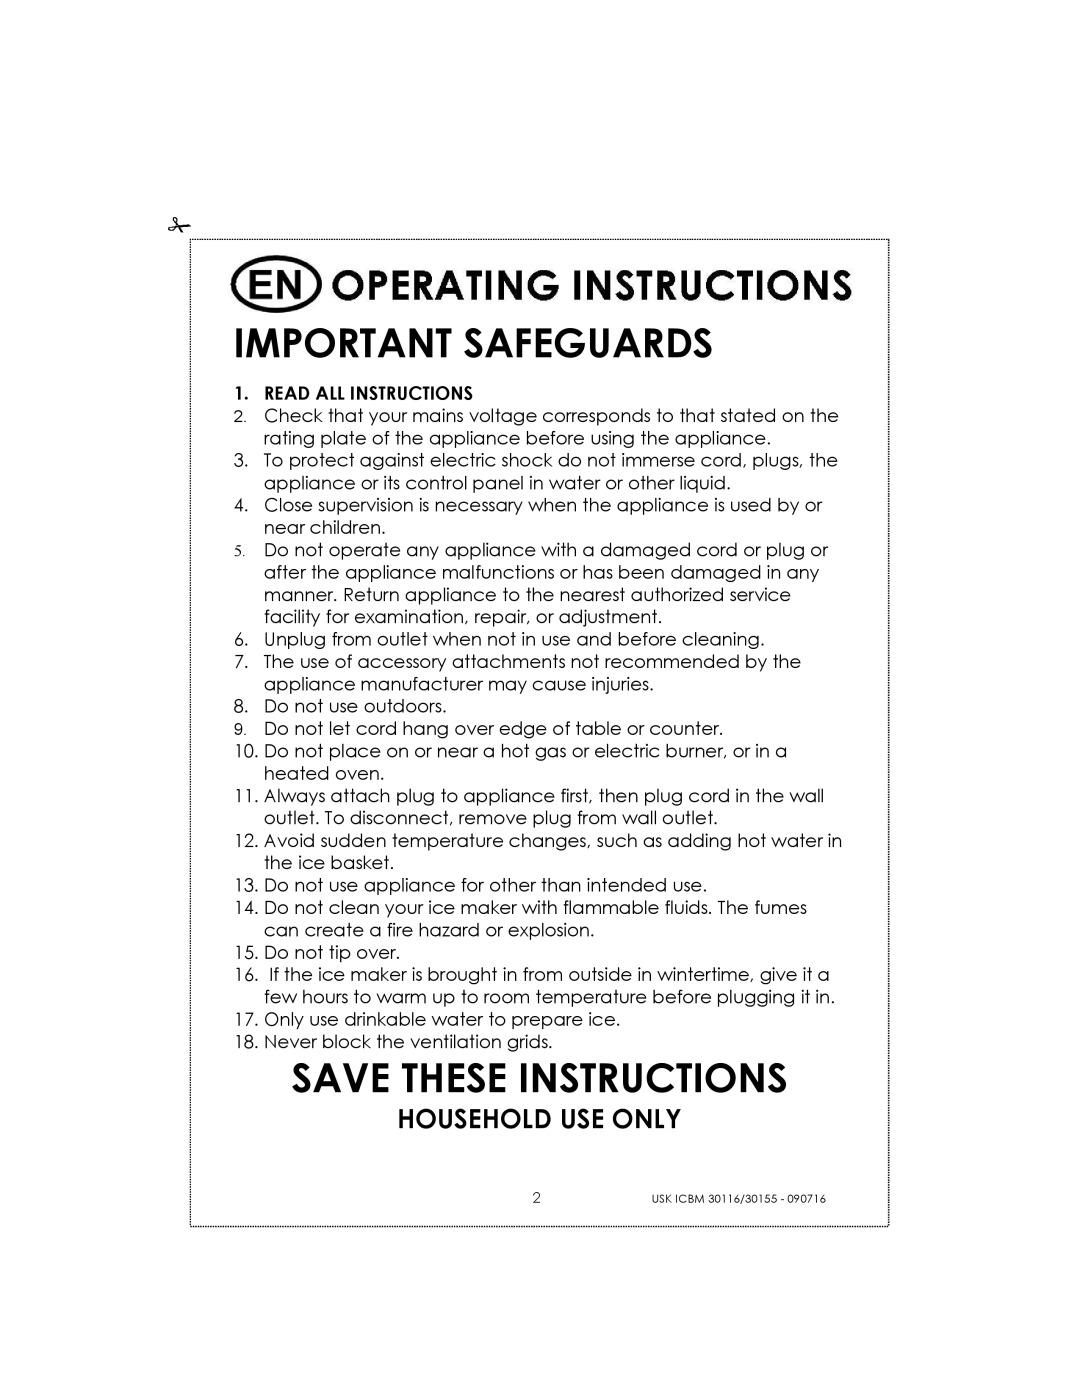 Kalorik USK ICBM 30116, USK ICBM 30155 manual Important Safeguards, Save These Instructions, Household Use Only 